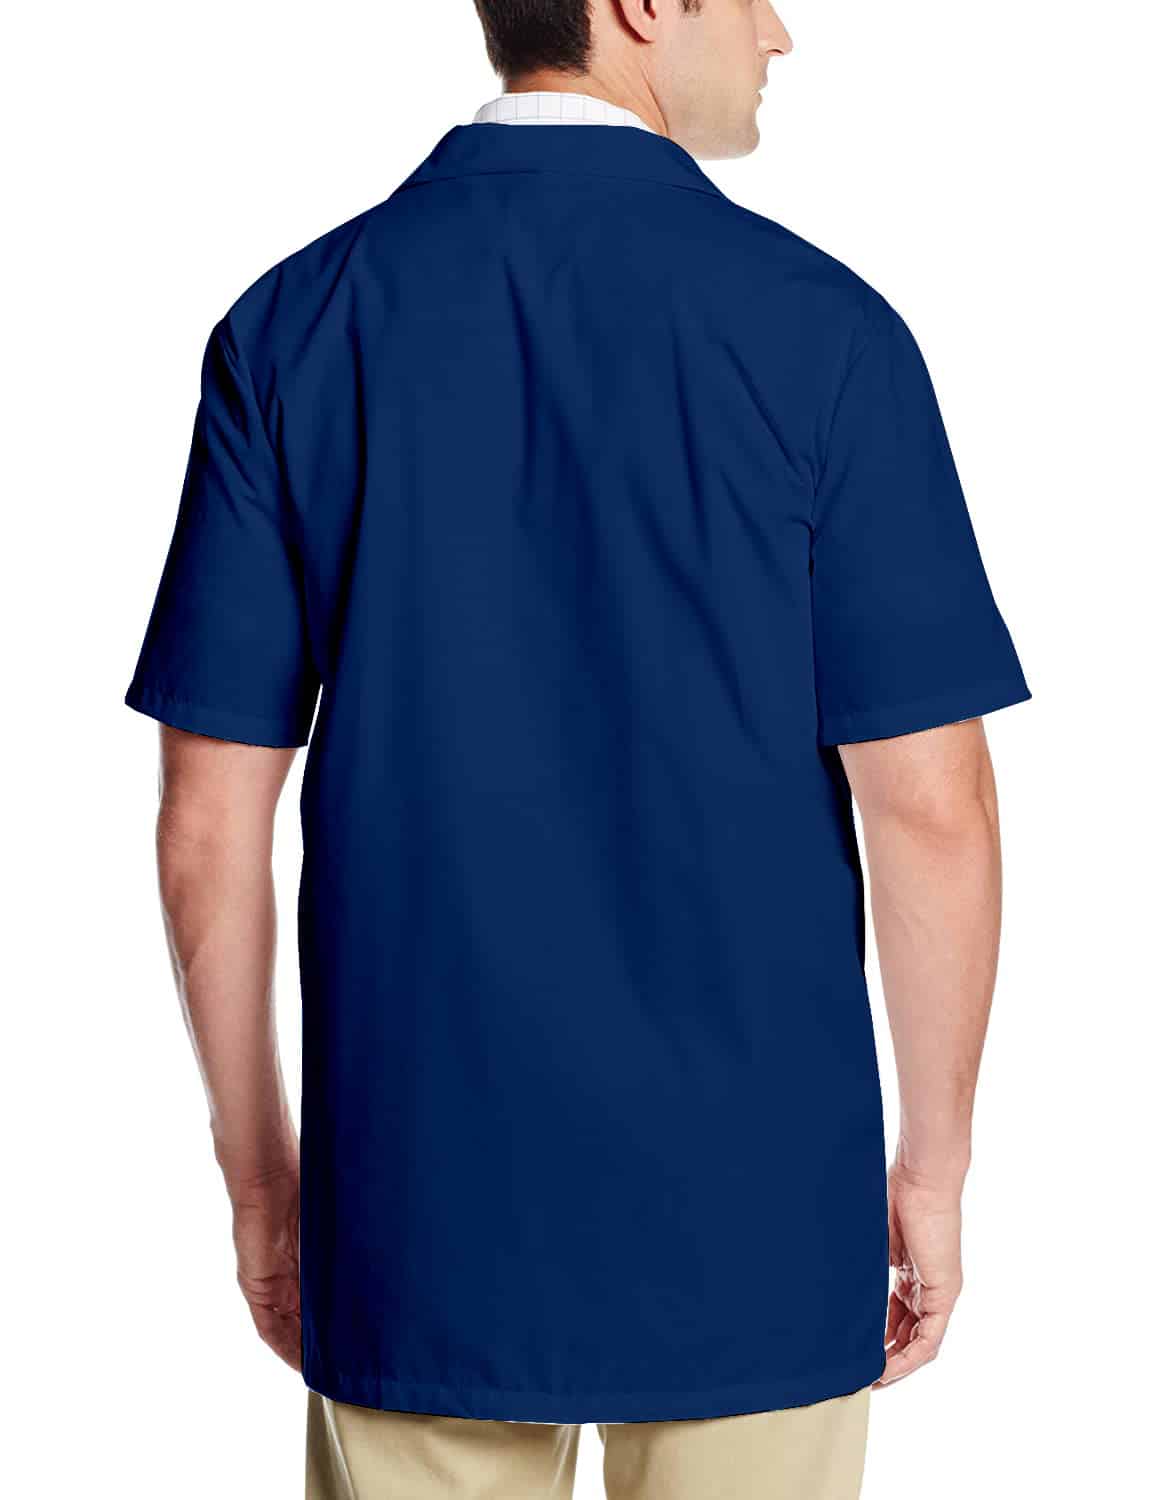 Navy Blue Lab Coat - Half Sleeve